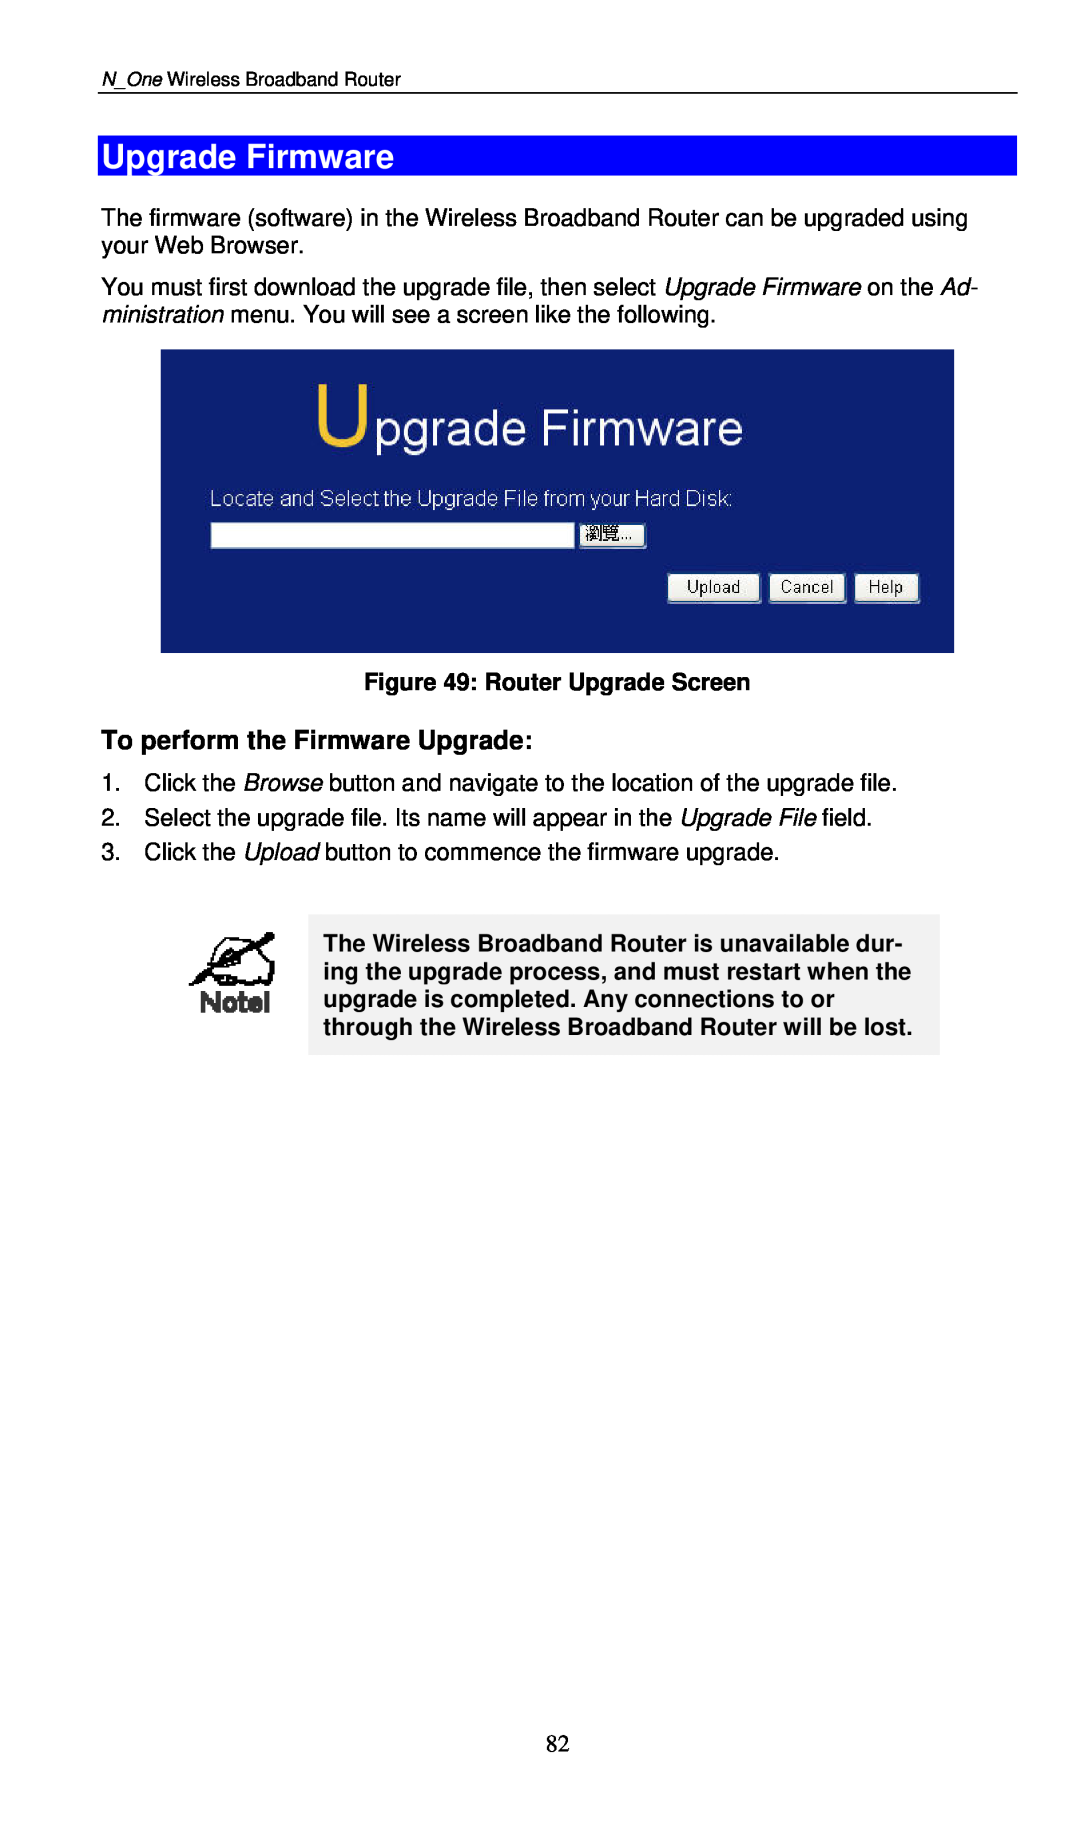 LevelOne WBR-6000 user manual Upgrade Firmware, To perform the Firmware Upgrade, Router Upgrade Screen 